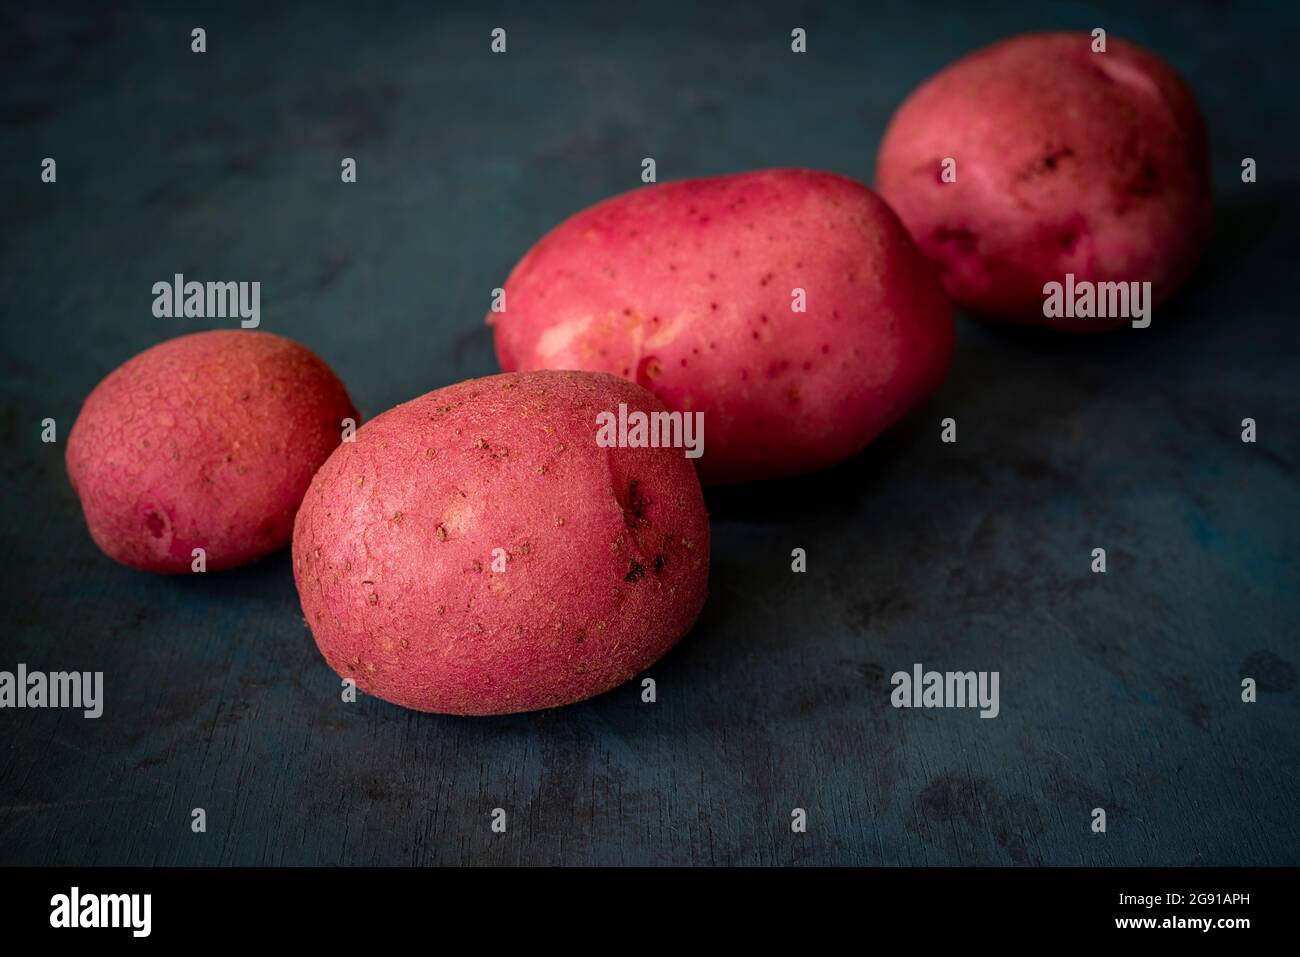 Freshly dug red potatoes on a dark background. Stock Photo